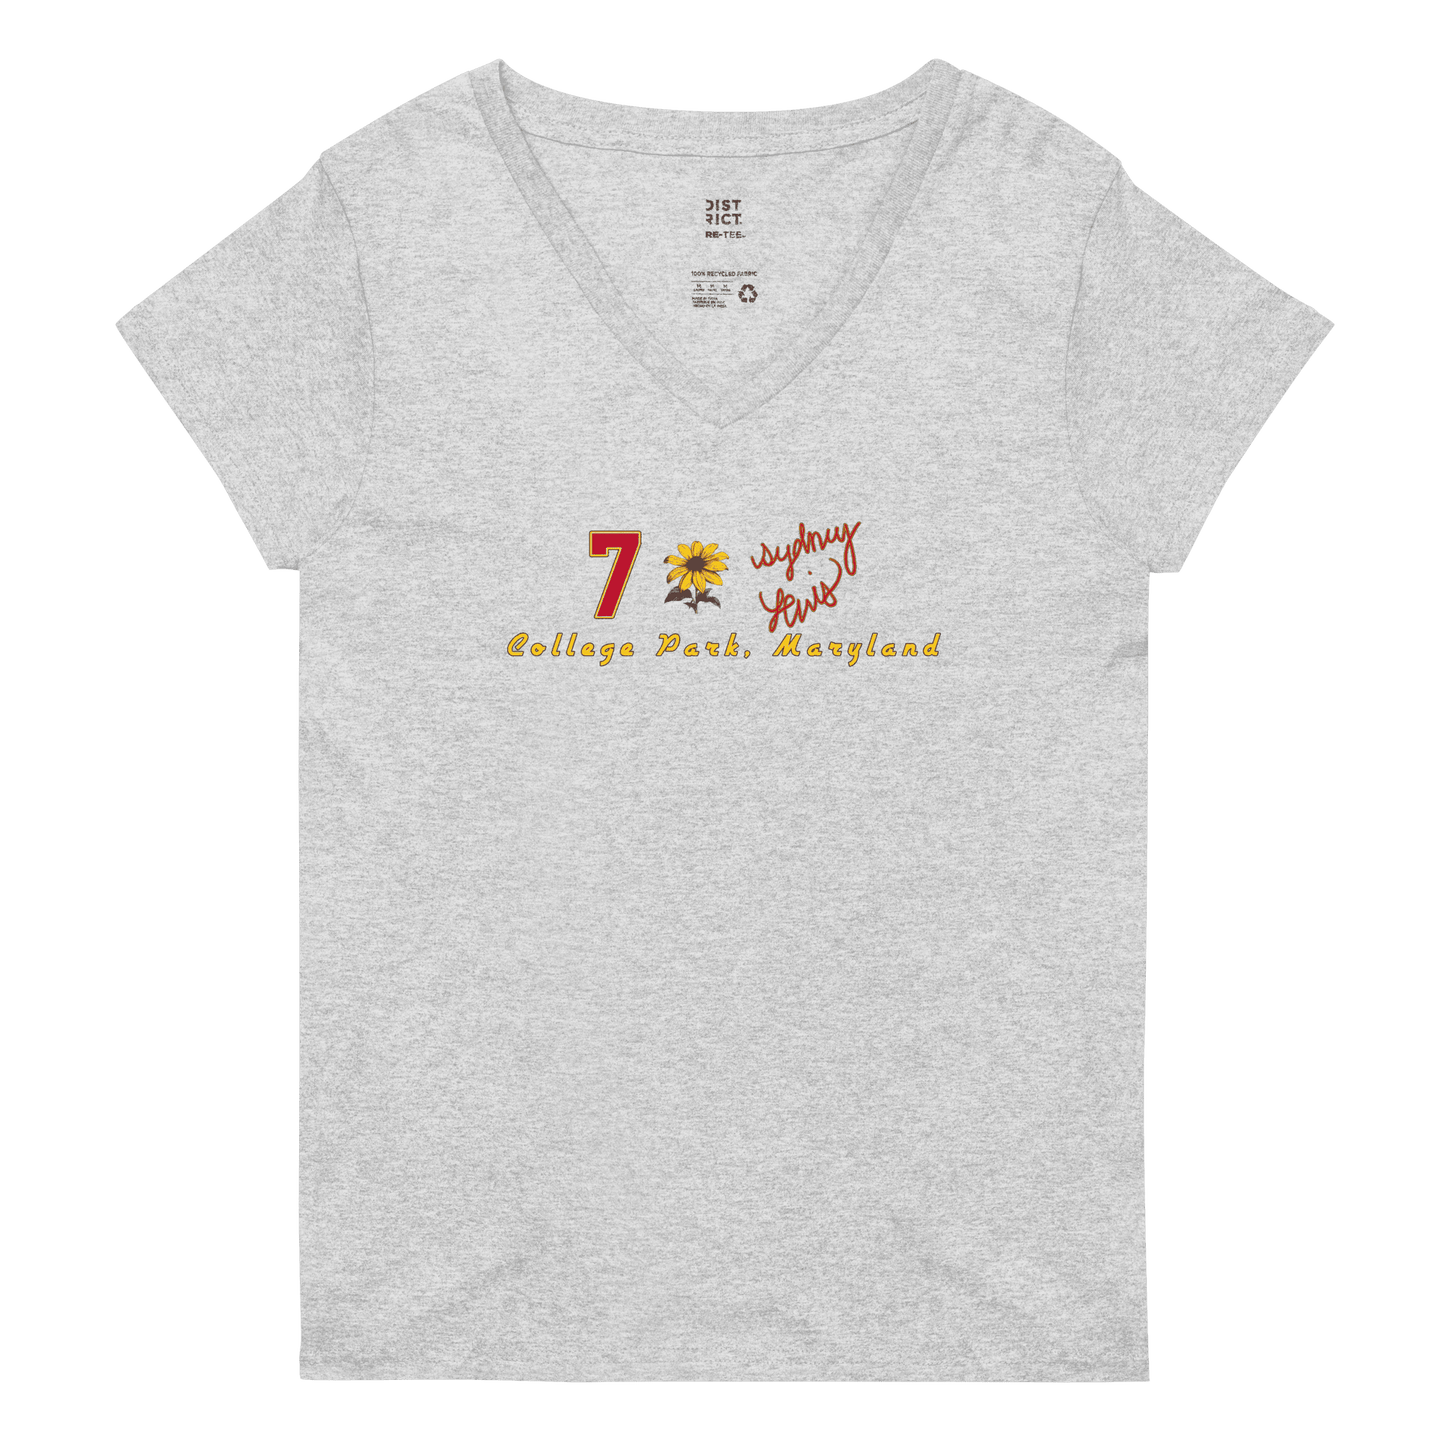 Sydney Lewis | Player Patch V-neck T-shirt - Clutch -